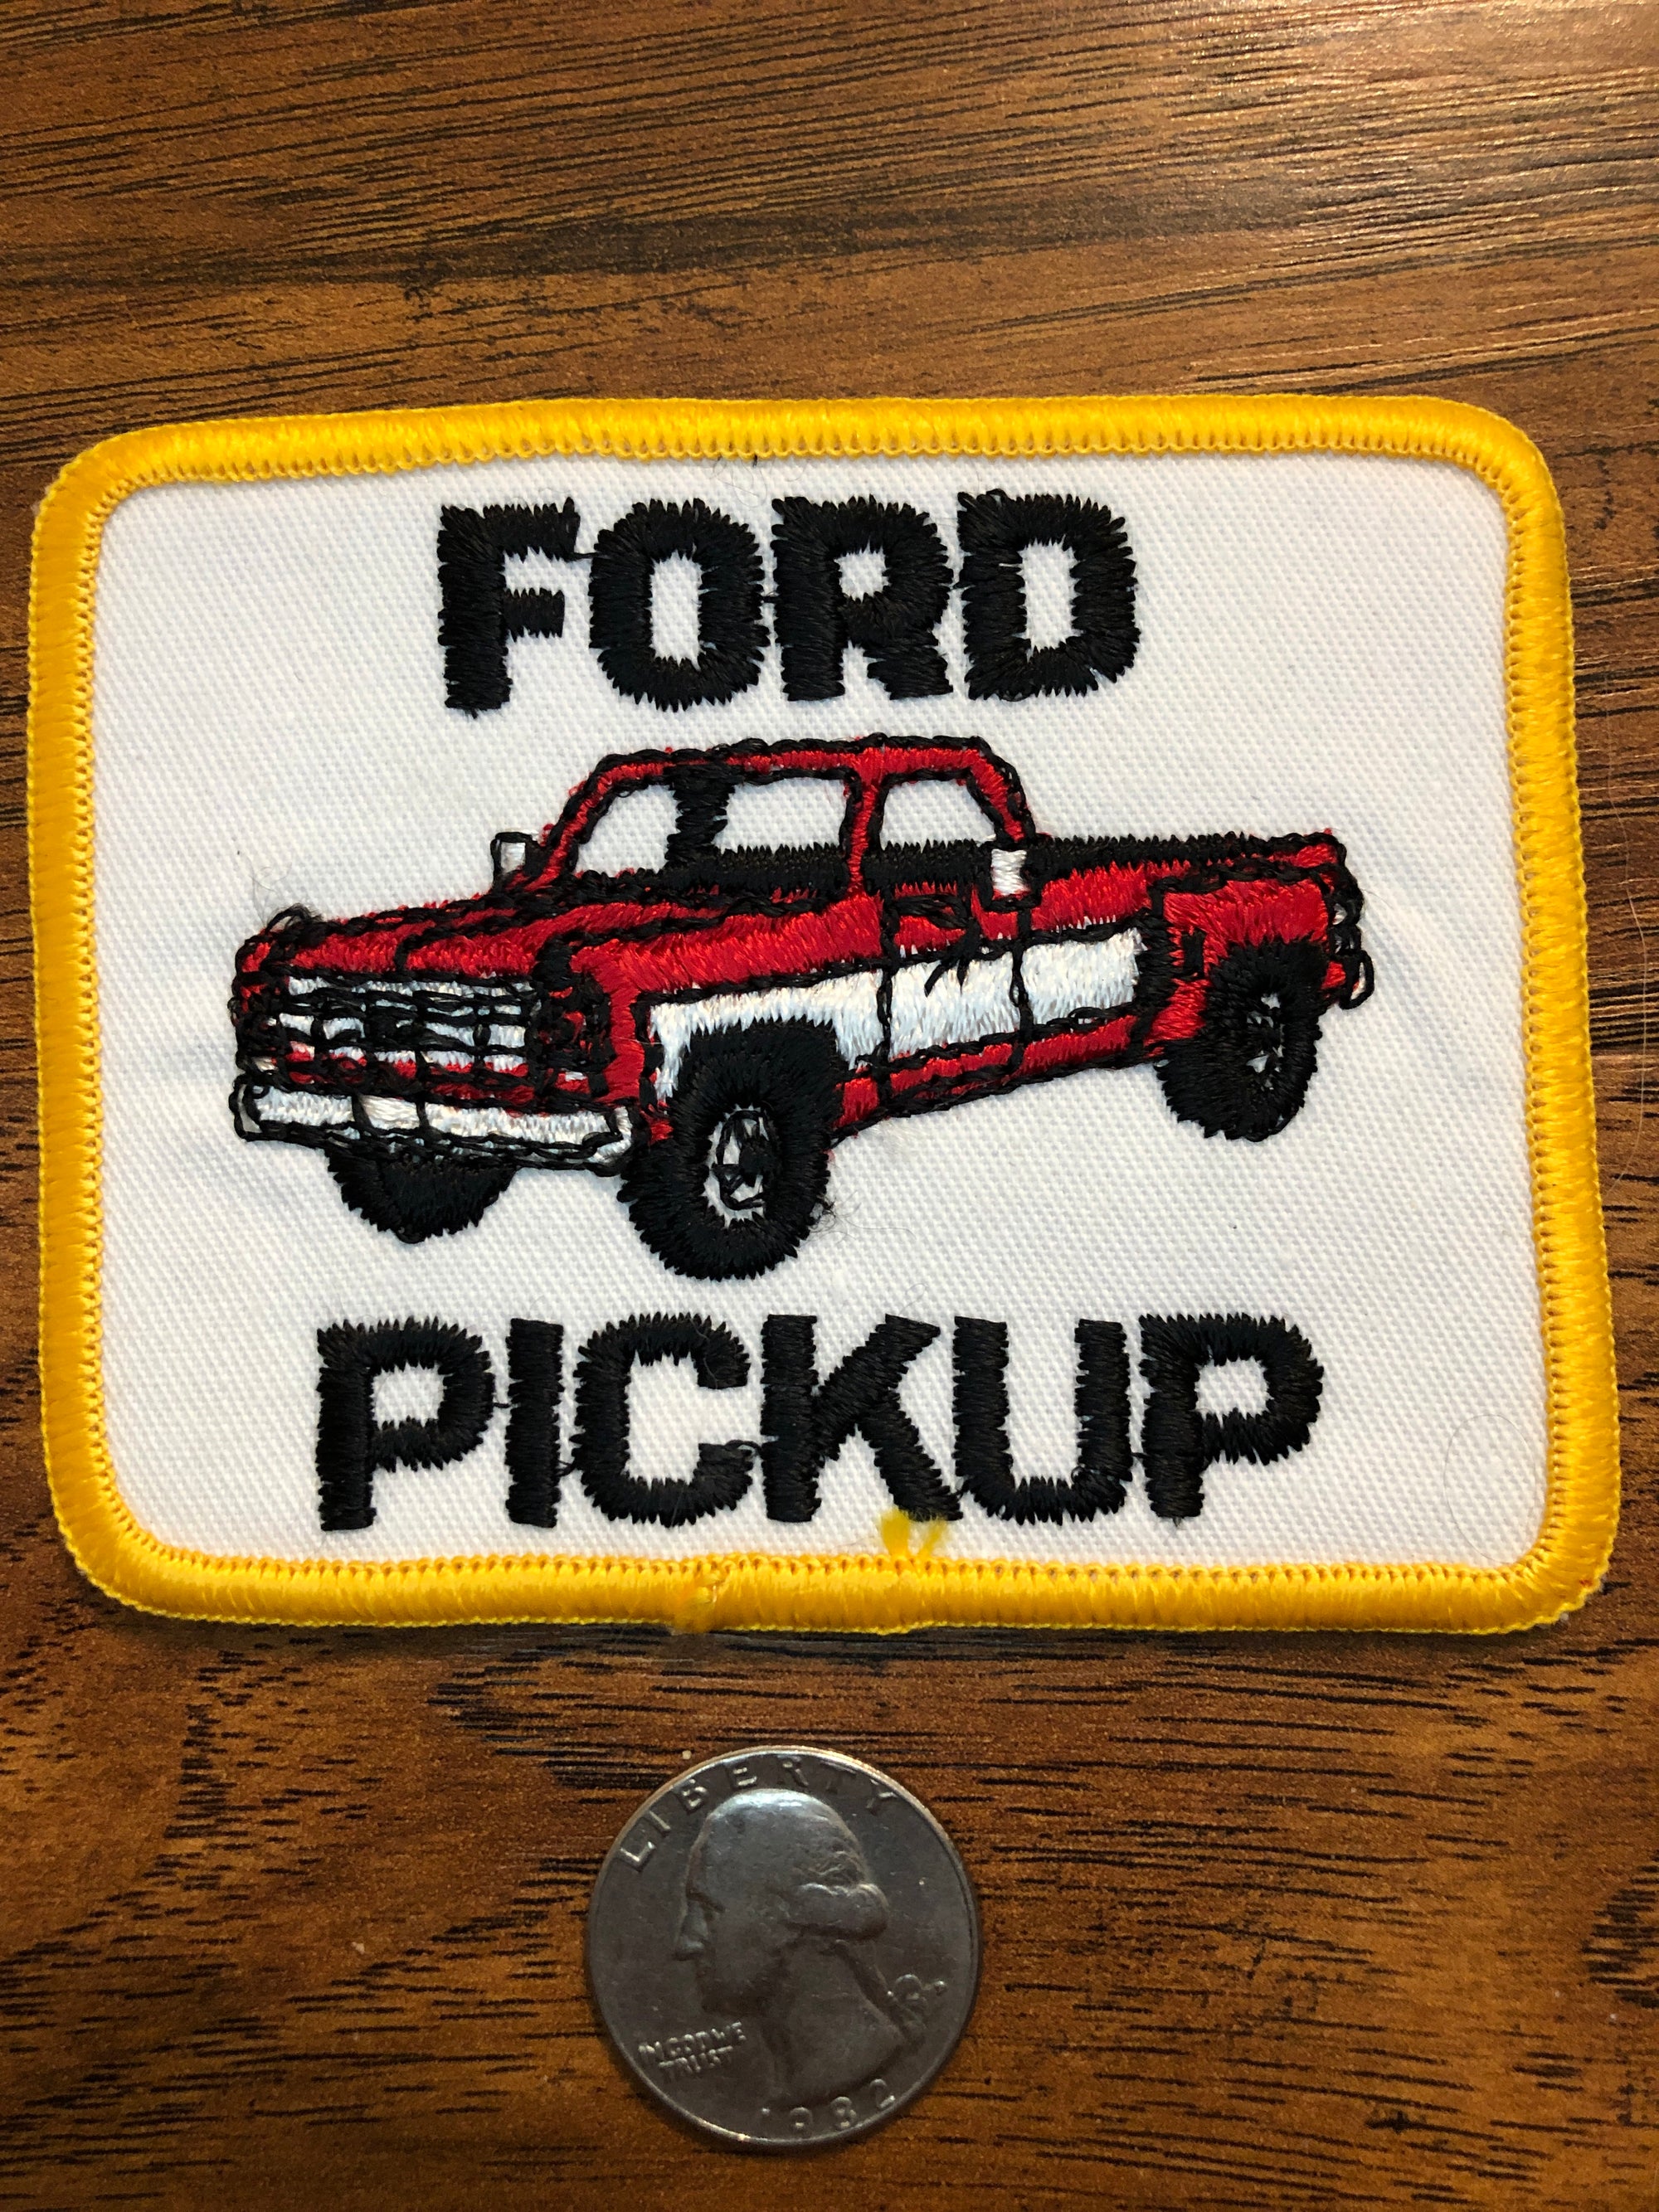 Vintage Ford Pickup